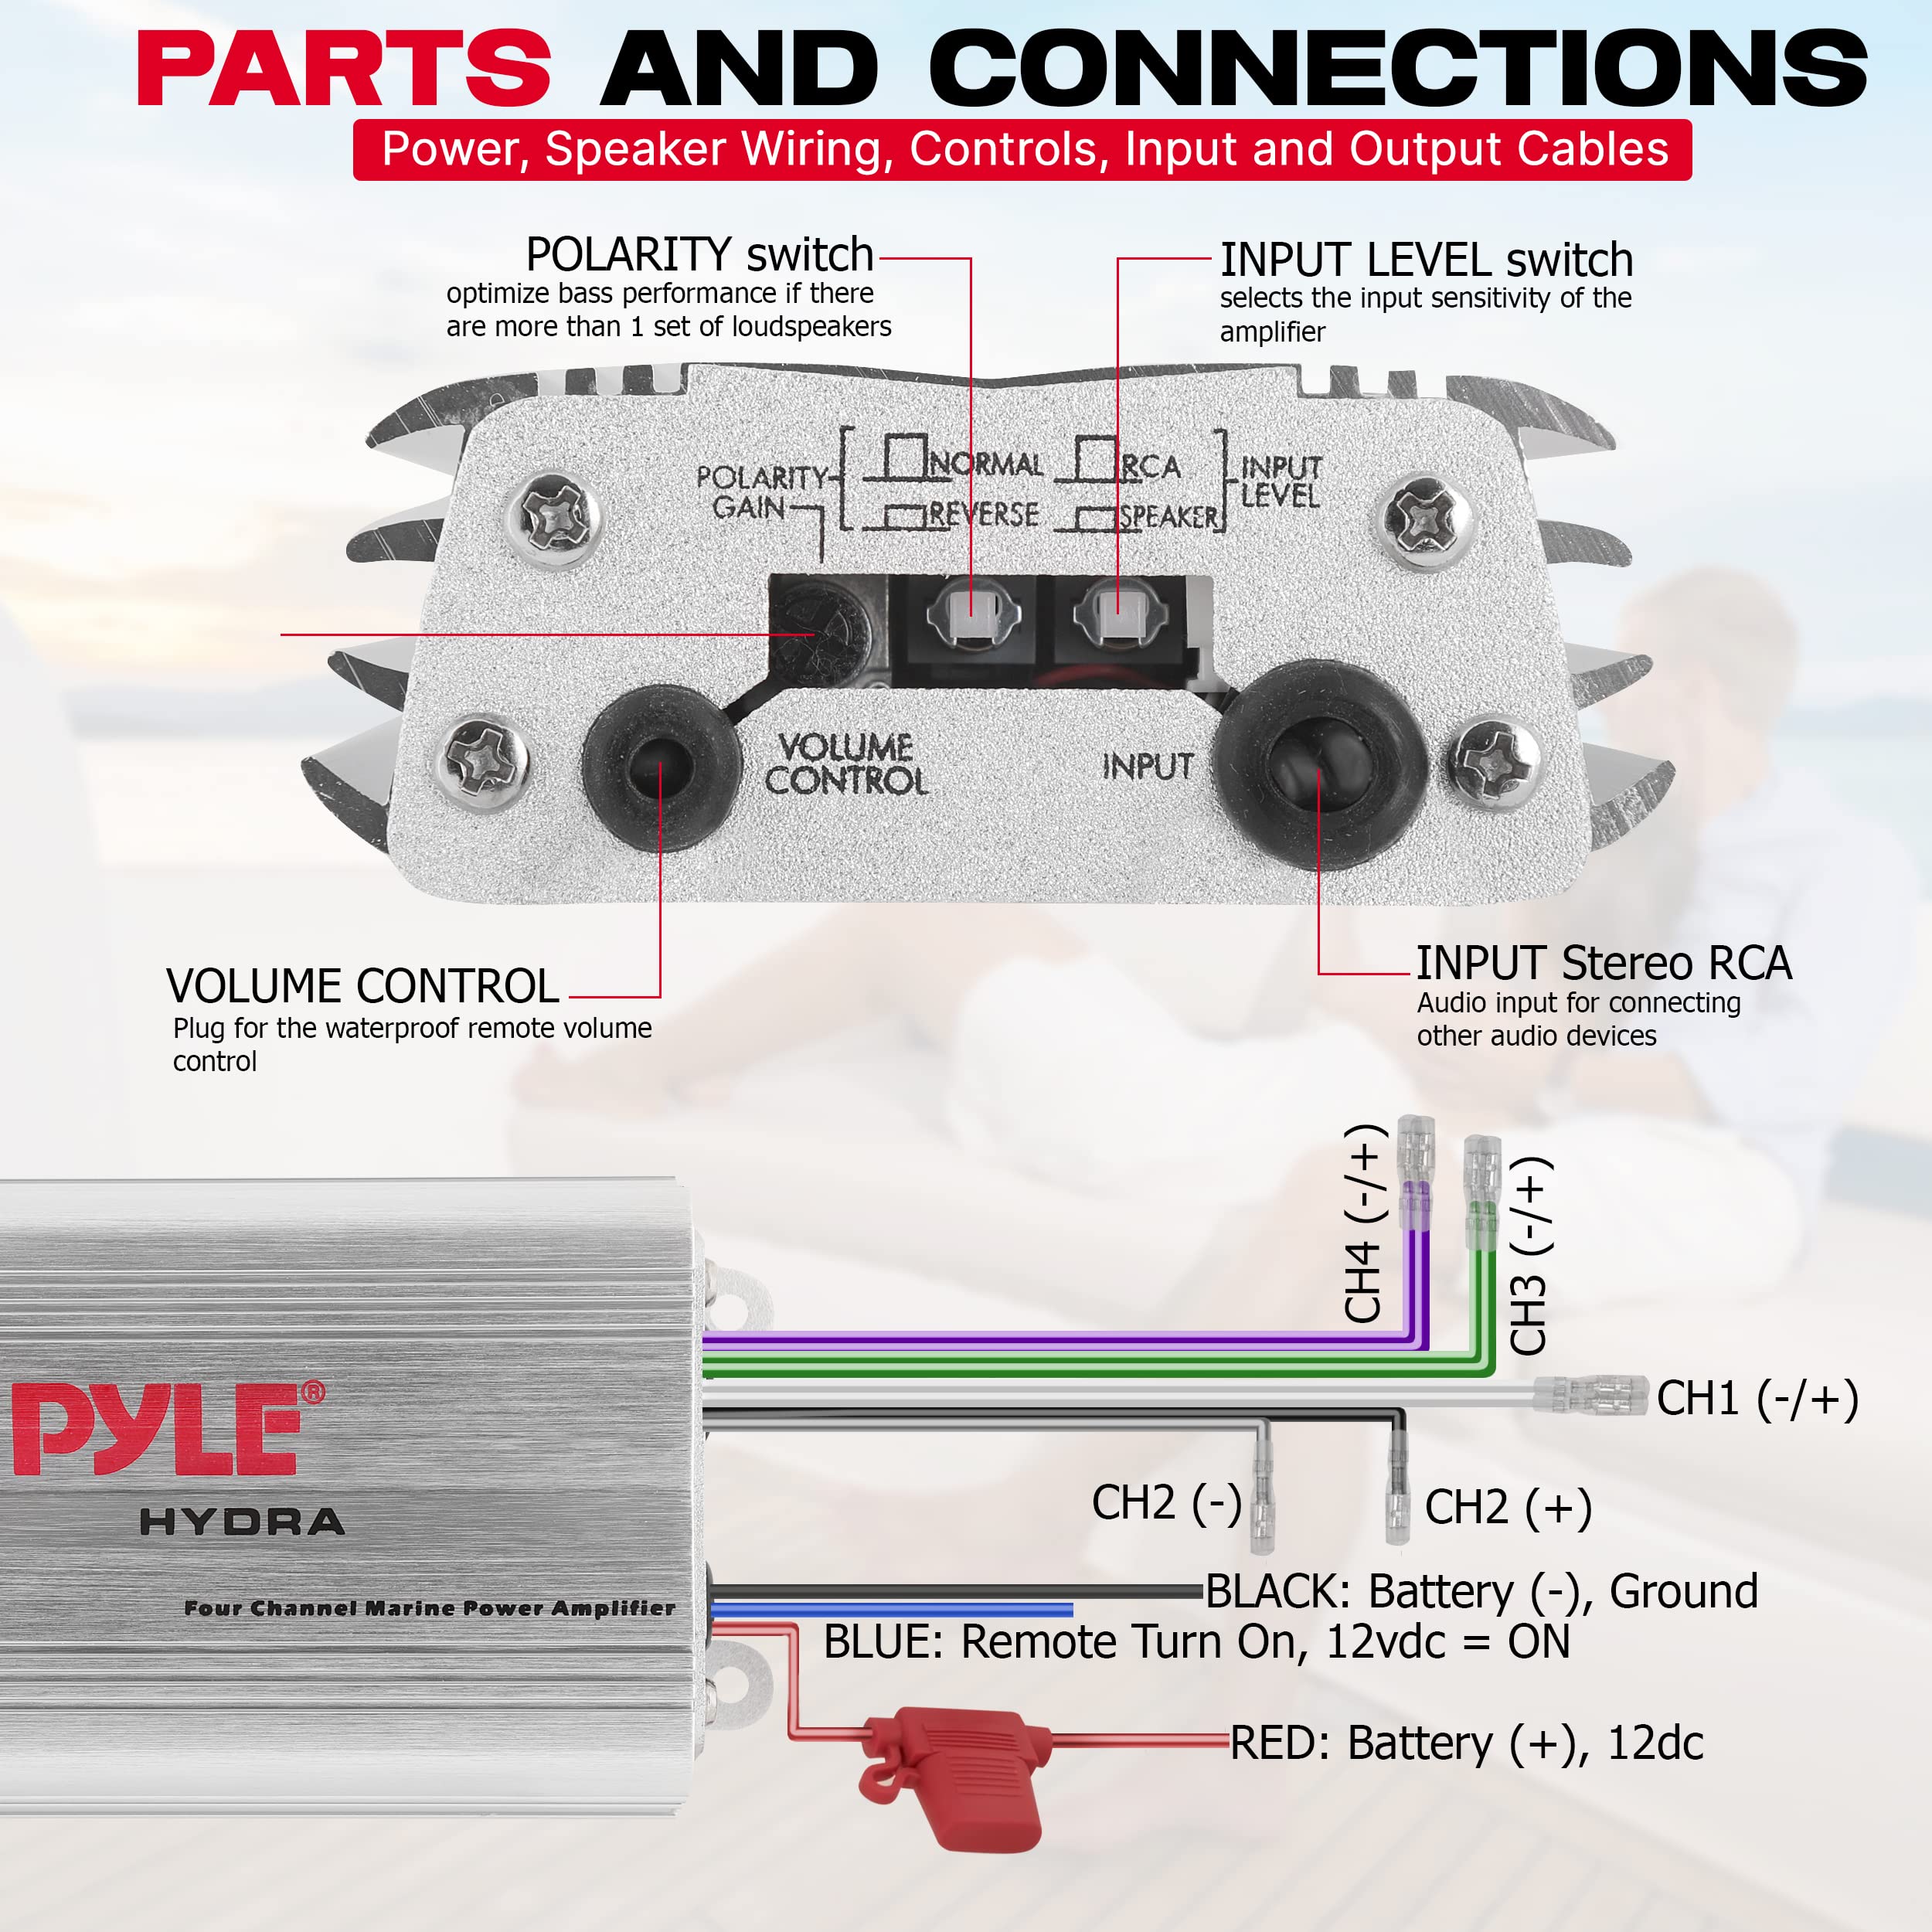 Pyle Hydra Marine Amplifier - Upgraded Elite Series 400 Watt 4 Channel Micro Amplifier - Waterproof, GAIN Level Controls, RCA Stereo Input, 3.5mm Jack, MP3 & Volume Control (PLMRMP3A)